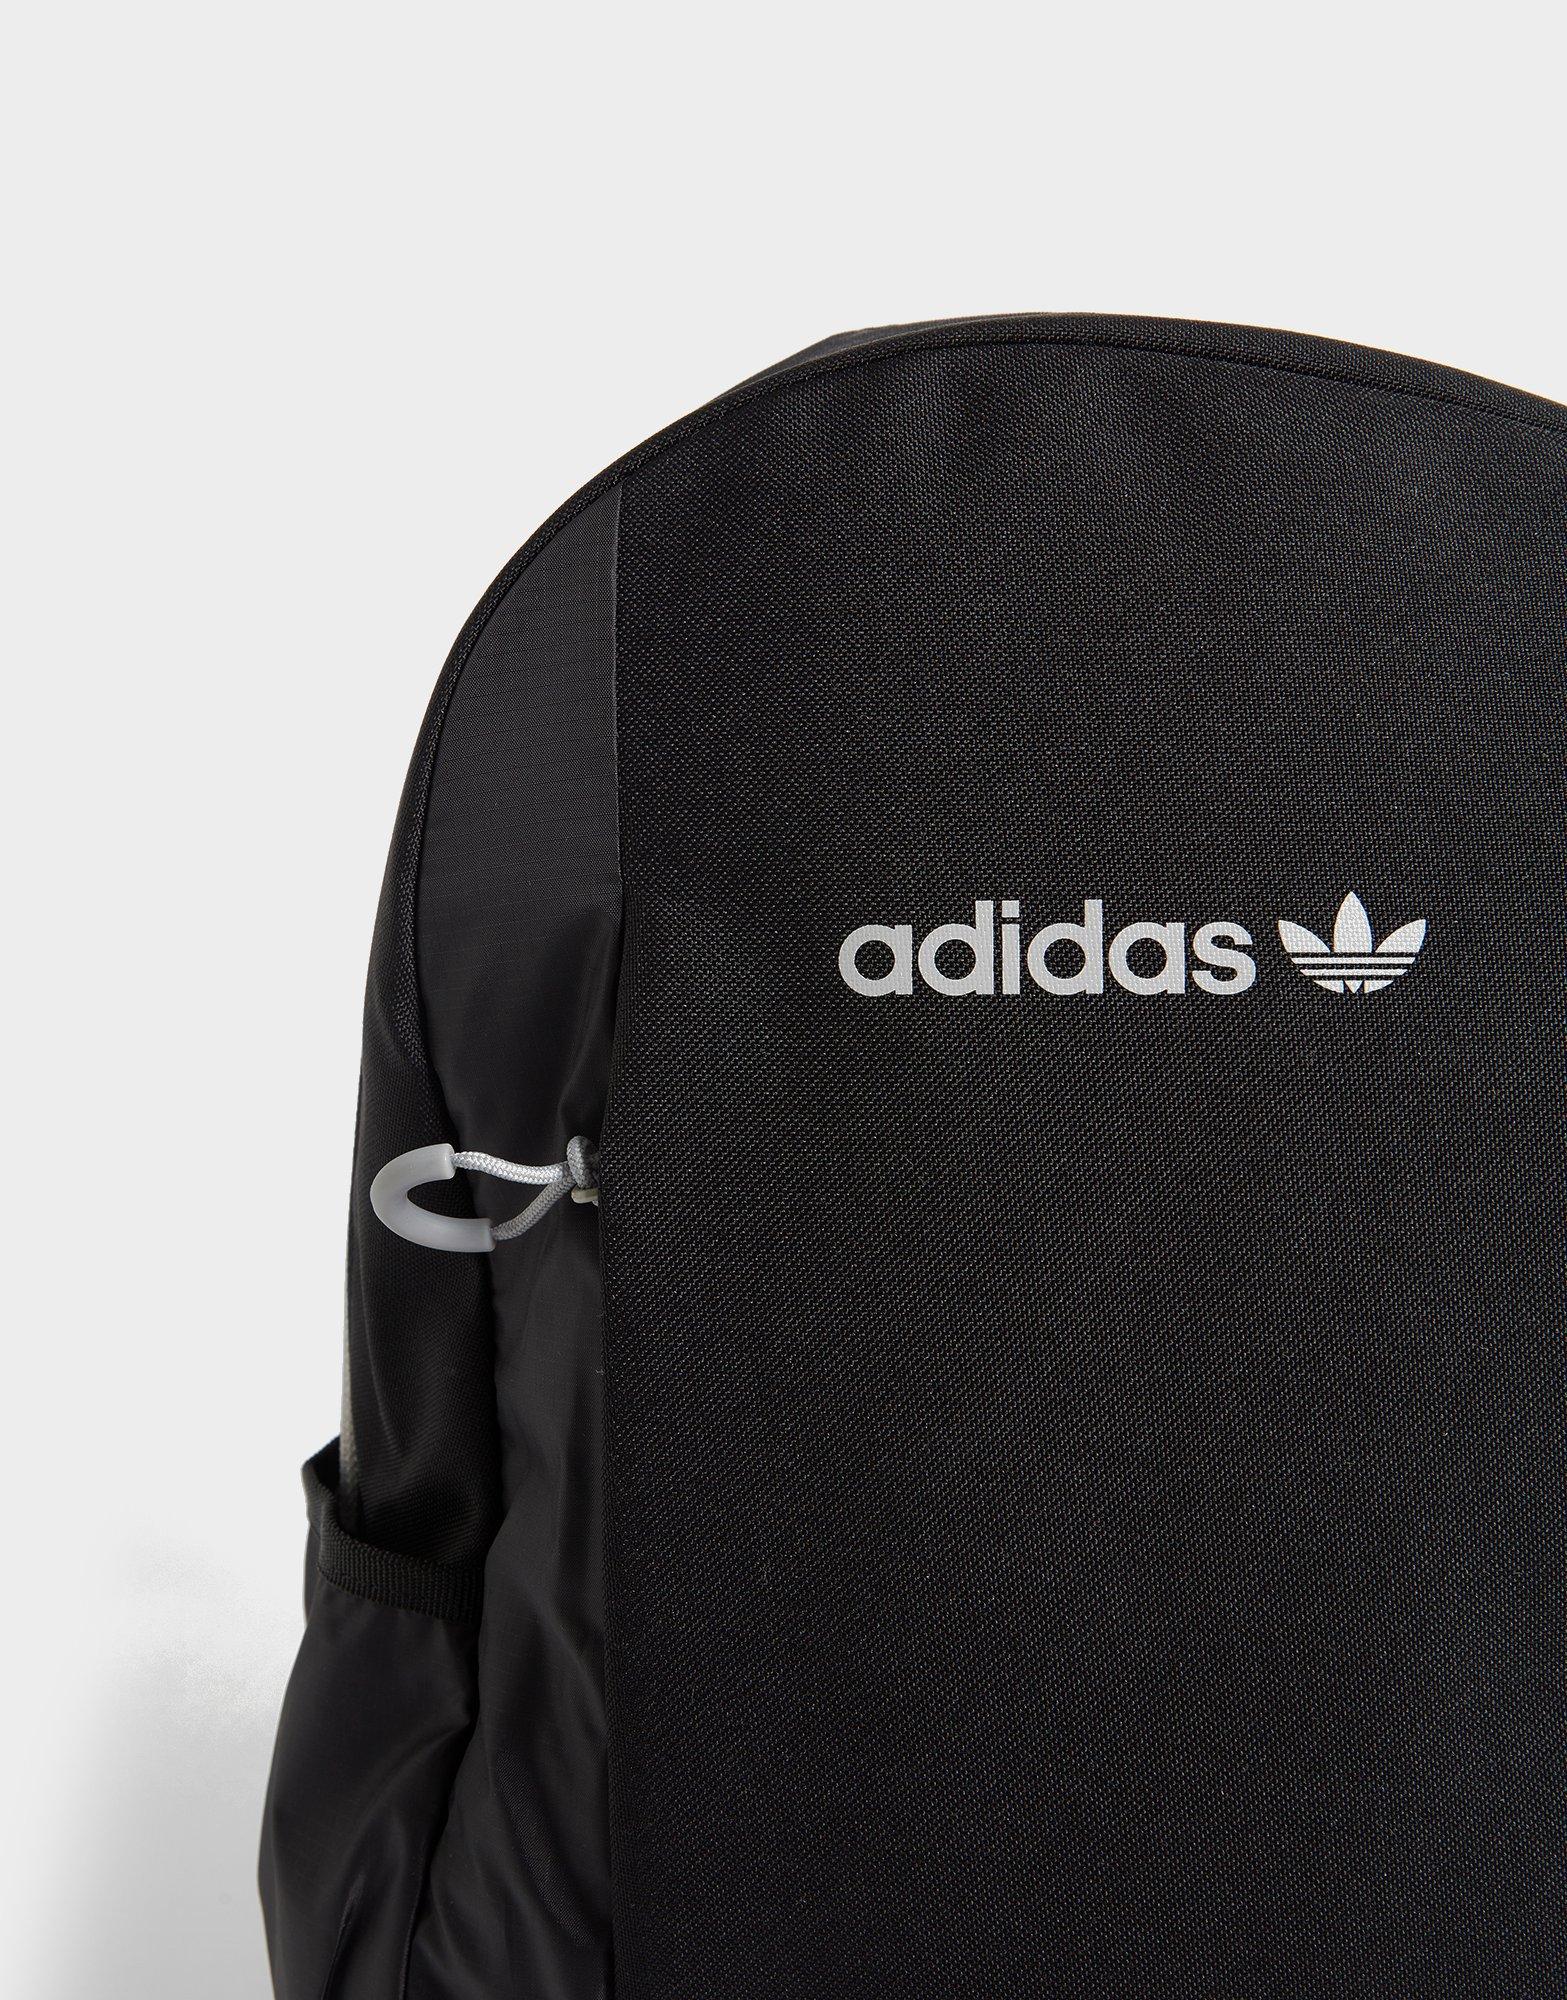 adidas Originals ZX Backpack